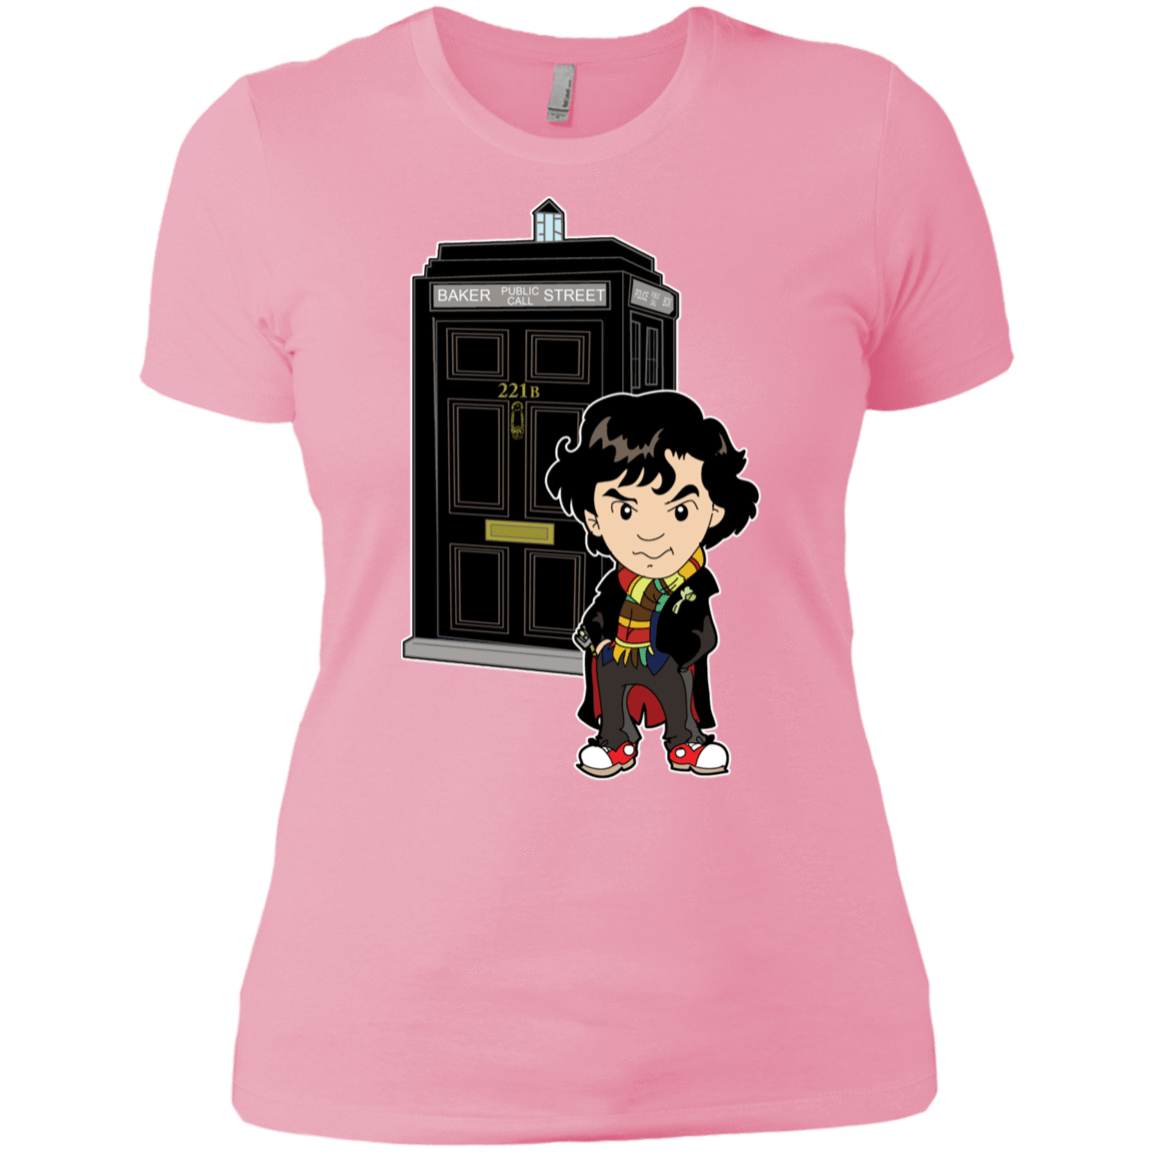 T-Shirts Light Pink / X-Small Doclock Women's Premium T-Shirt